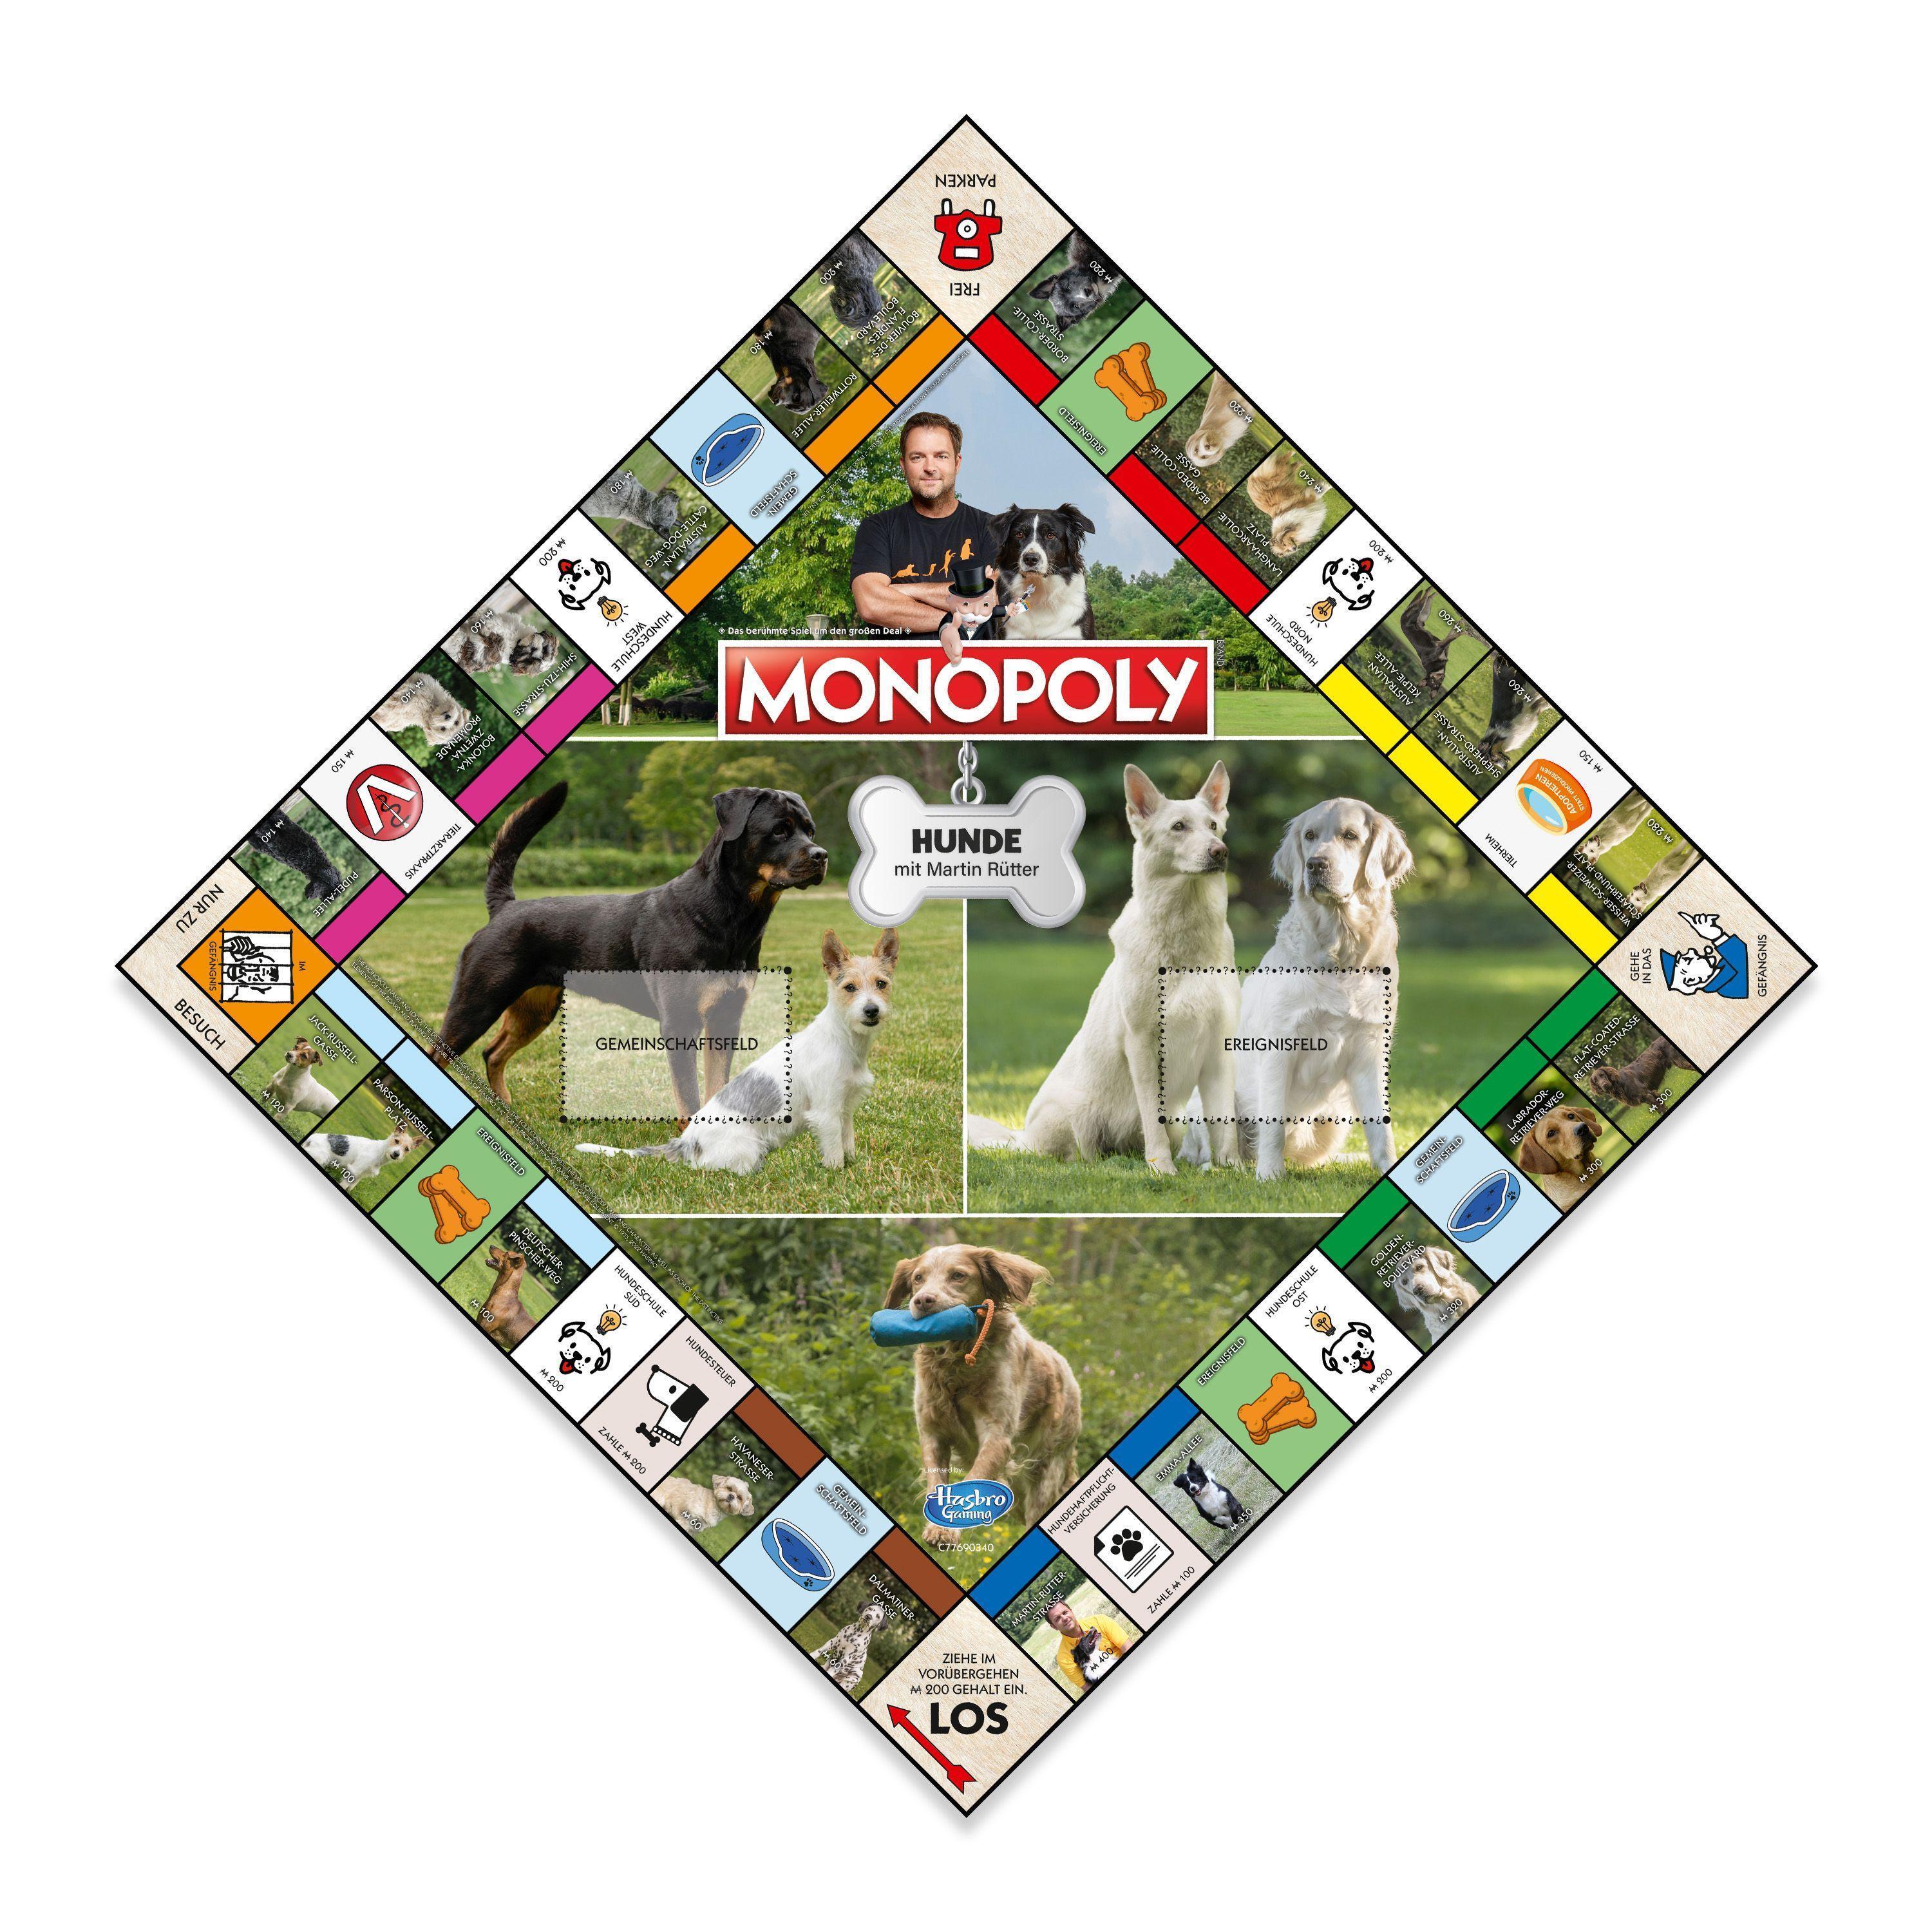 Monopoly Hunde mit Martin Rütter 3